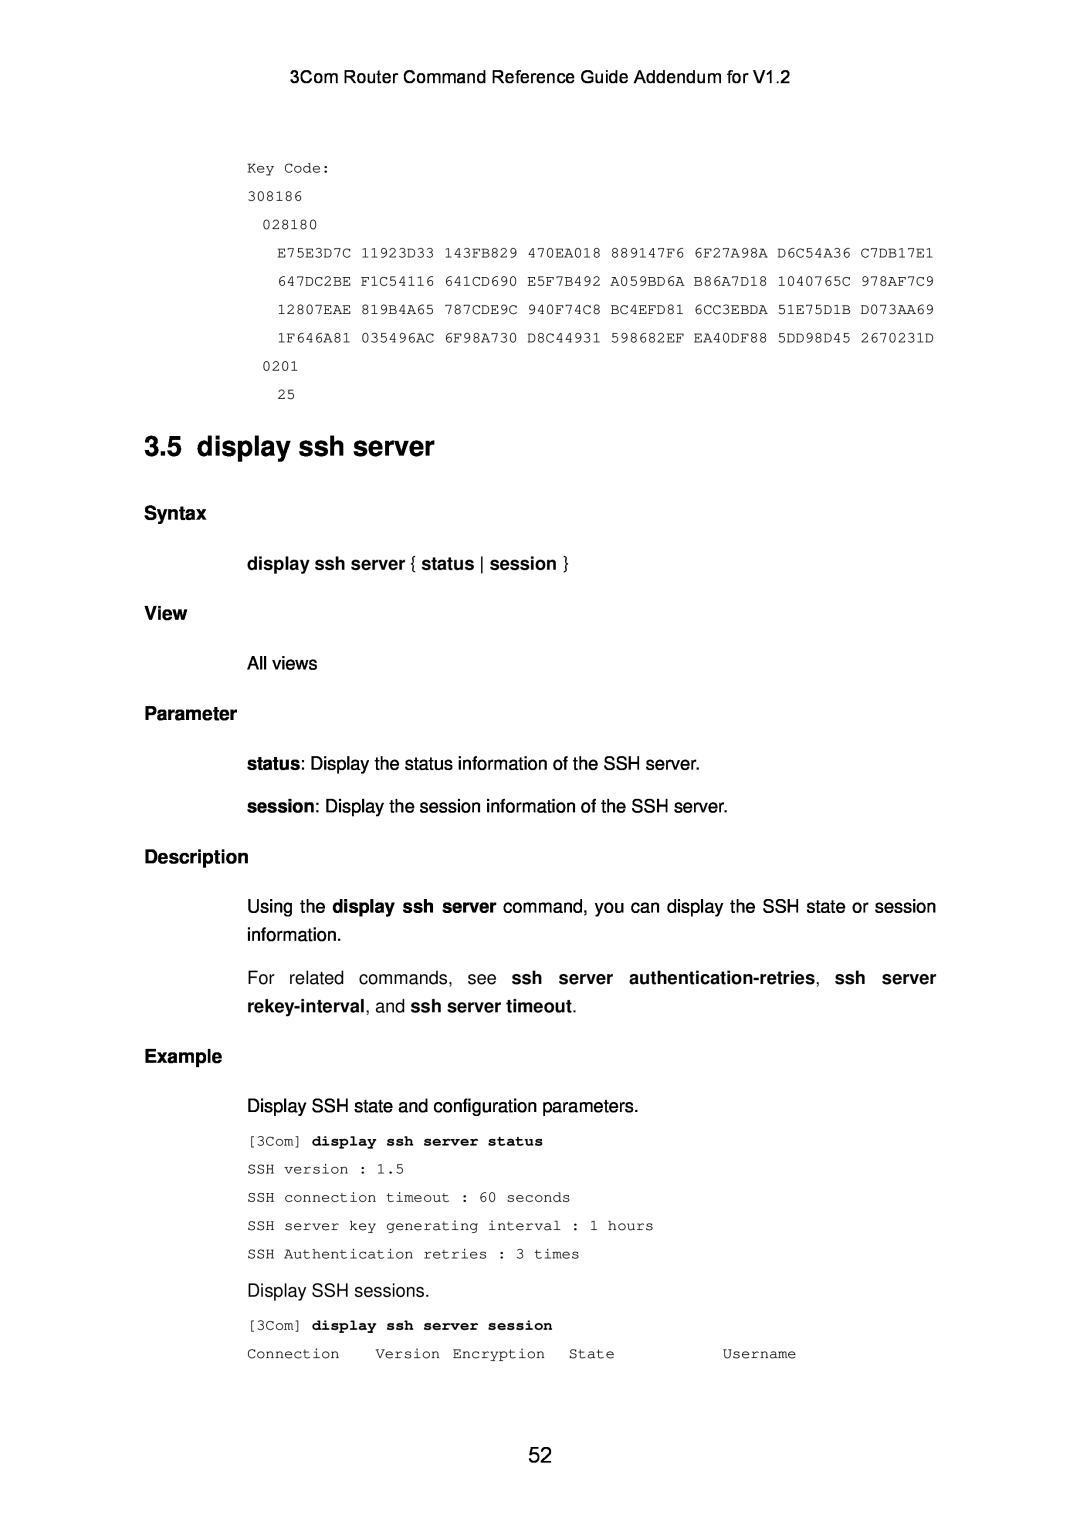 3Com 10014302 manual Syntax, View, Parameter, Description, Example, display ssh server status session 